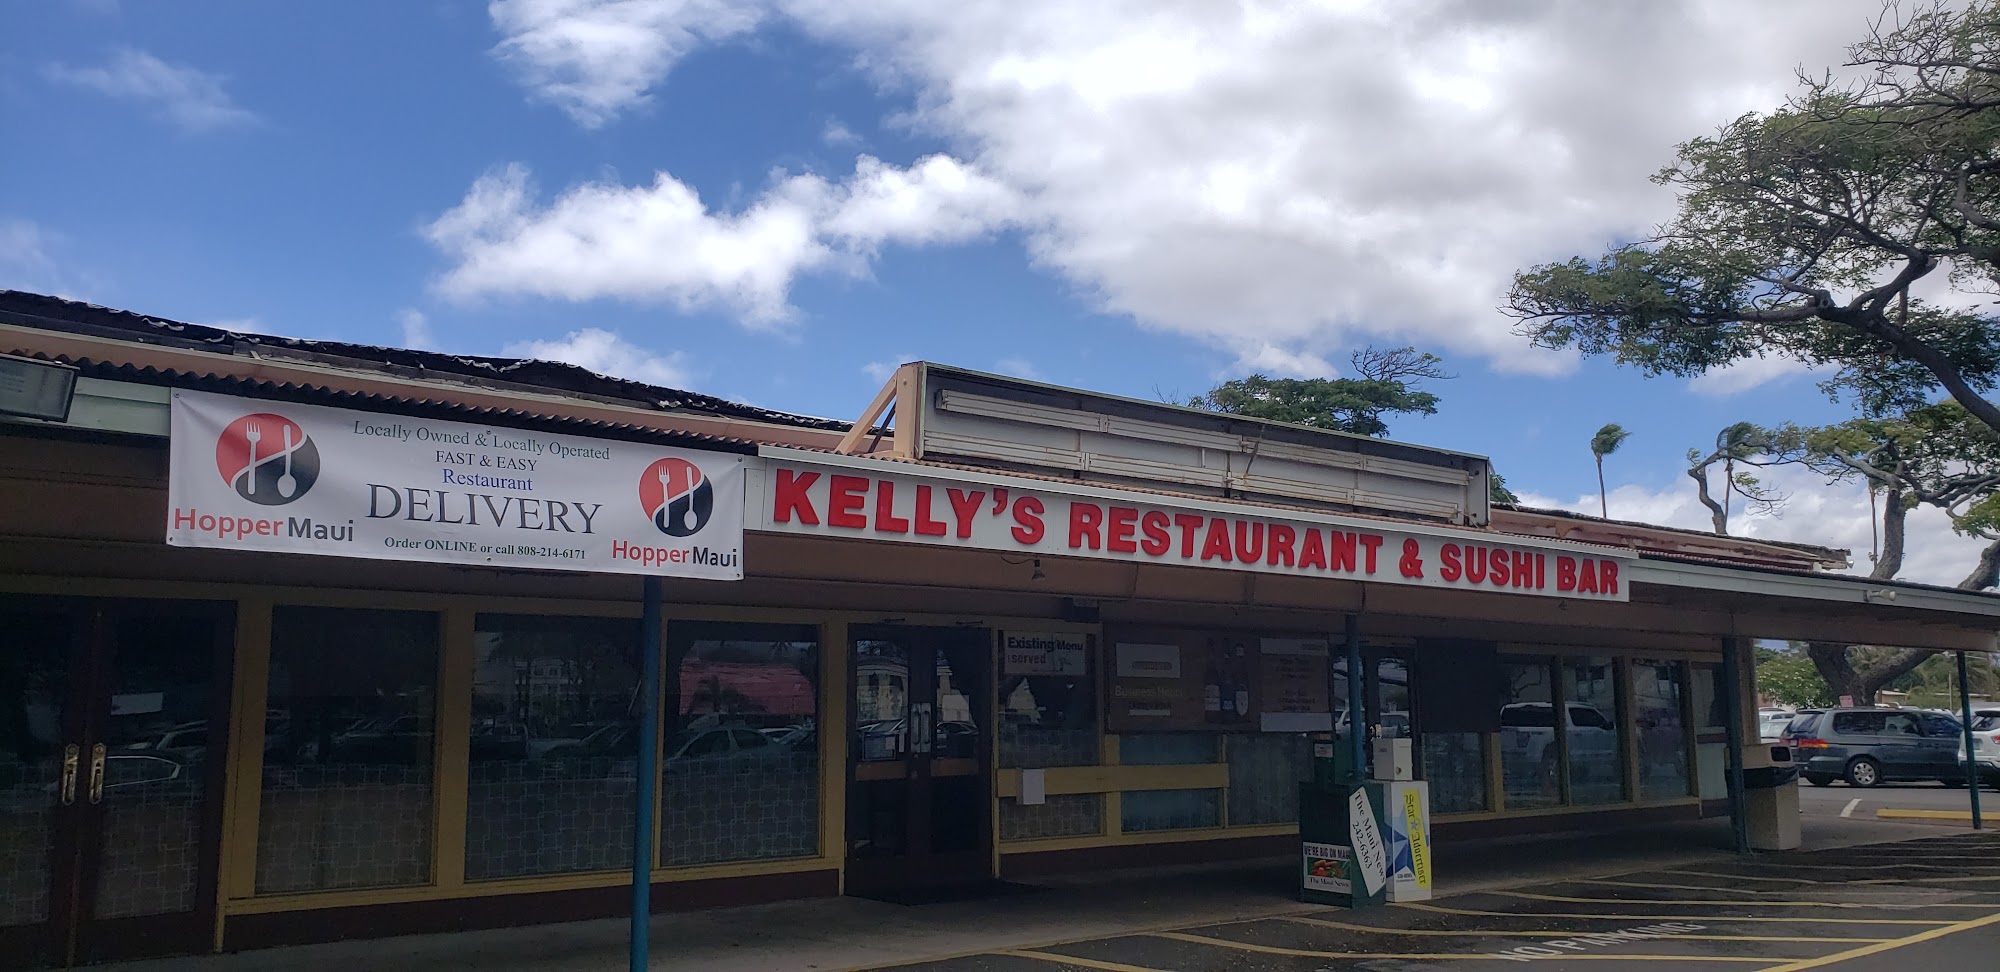 Kelly's Restaurant & Sushi Bar